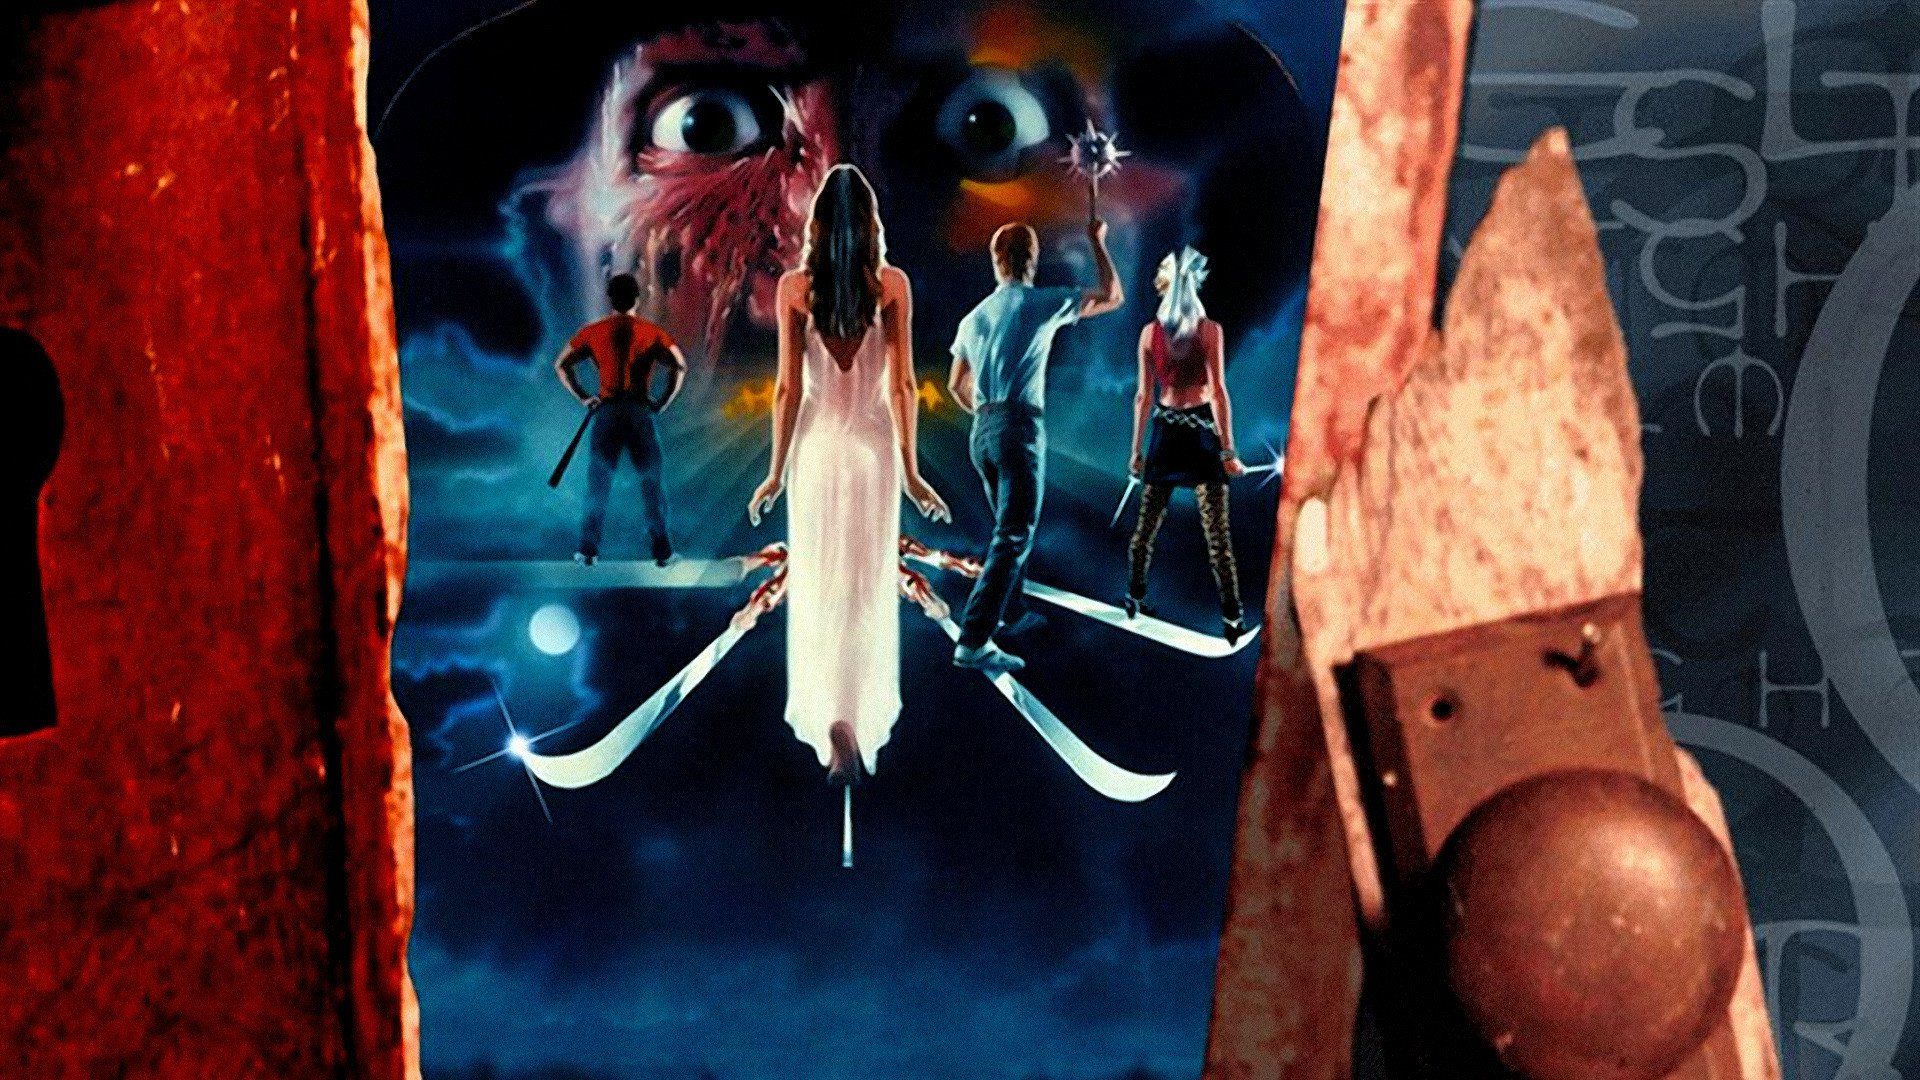 A Nightmare on Elm Street 3: Dream Warriors background